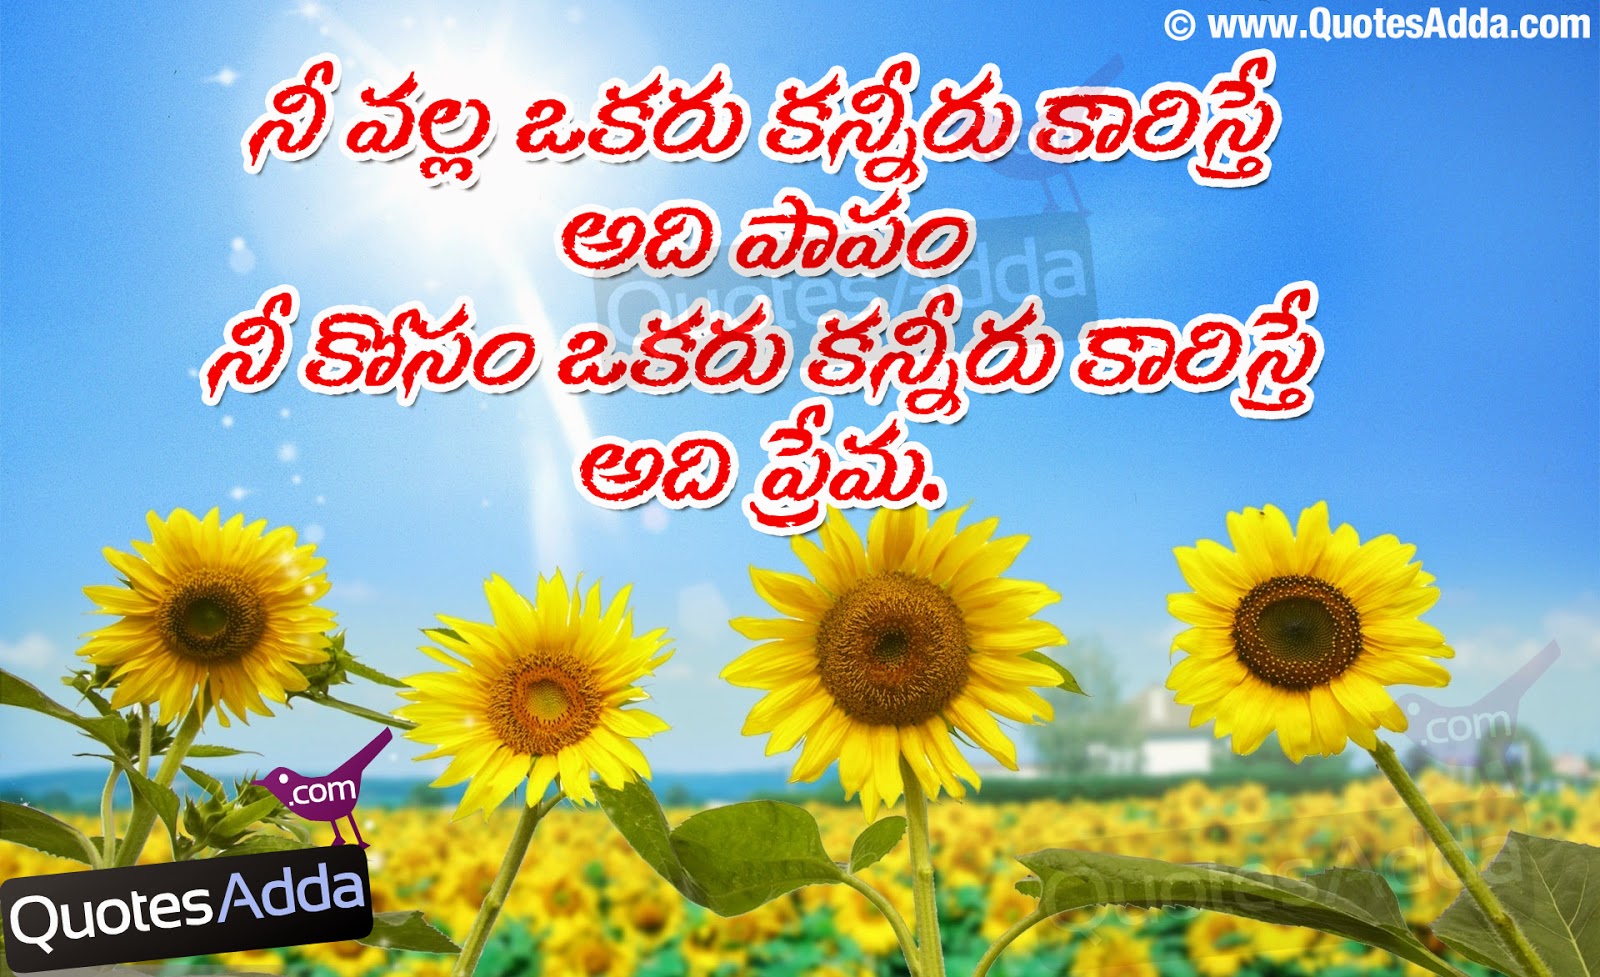 Sad English Quotes About Life Telugu nice love value quotations images quotesadda